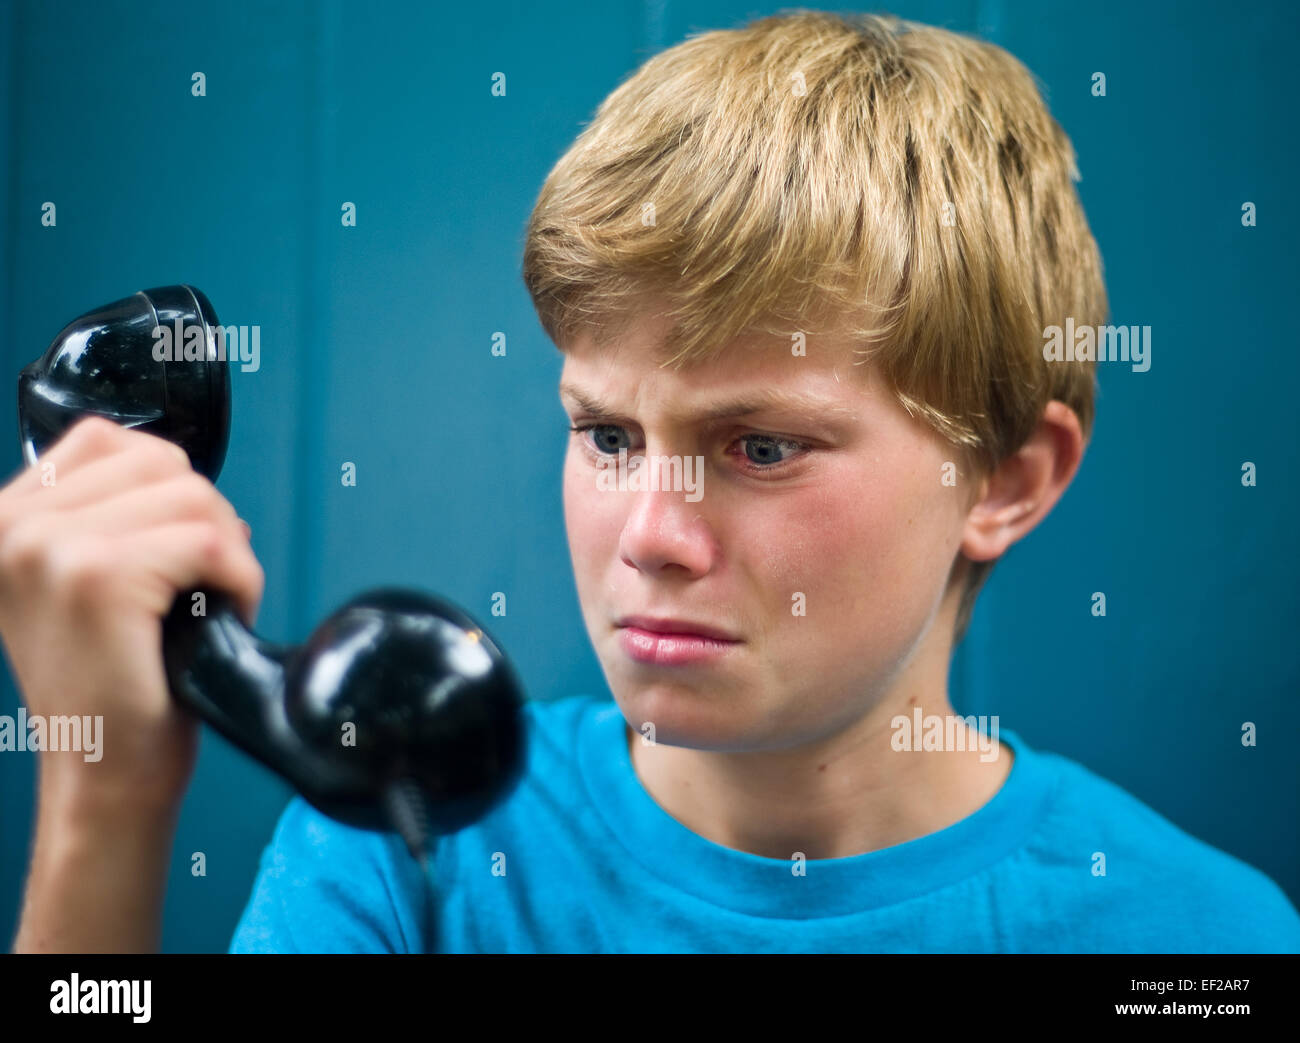 Unhappy child on phone. Job stress, bad news. Stock Photo